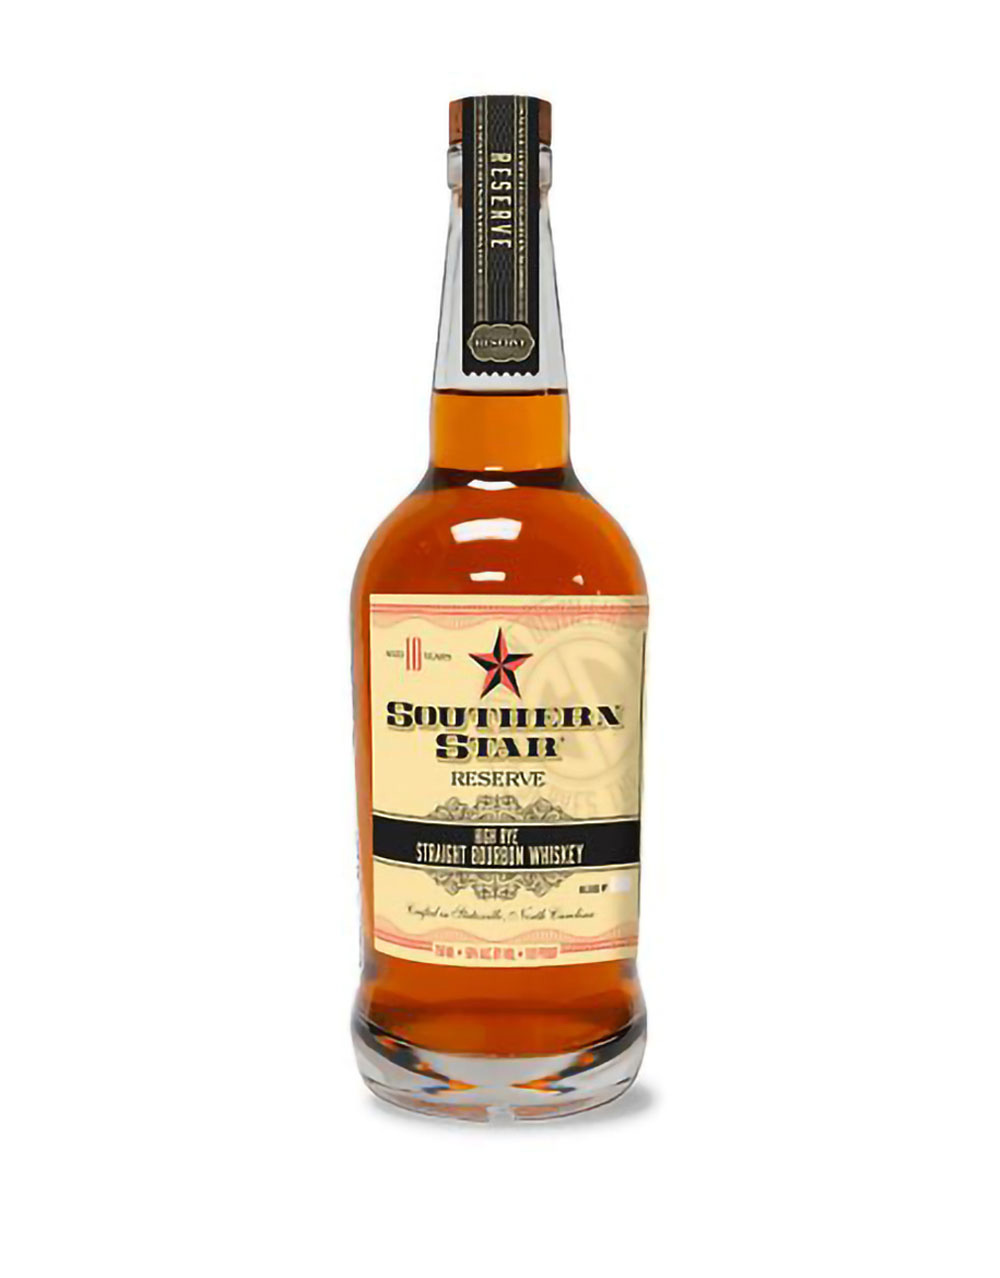 Southern Star Reserve High Rye Straight Bourbon Whiskey